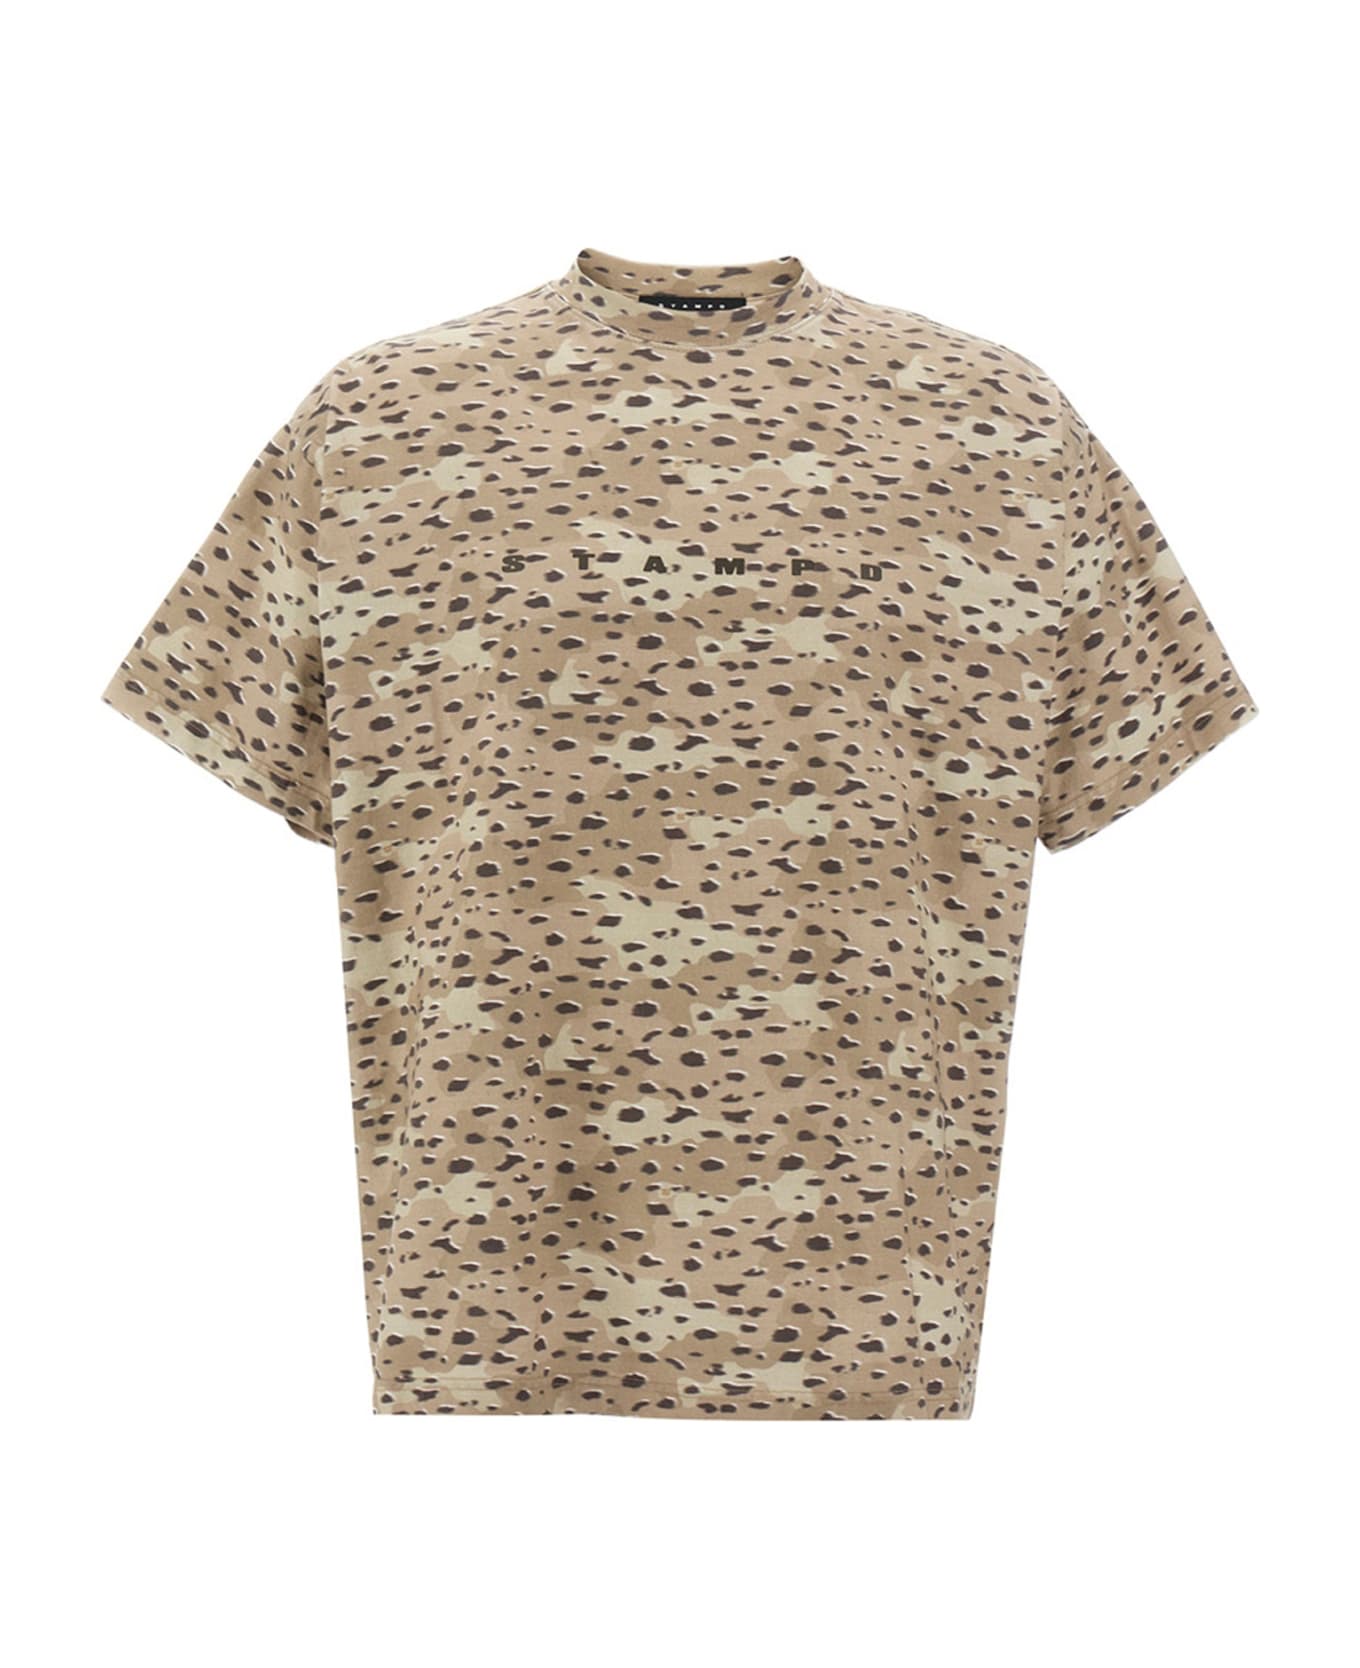 Stampd T-shirt 'camo Leopard' - Beige シャツ